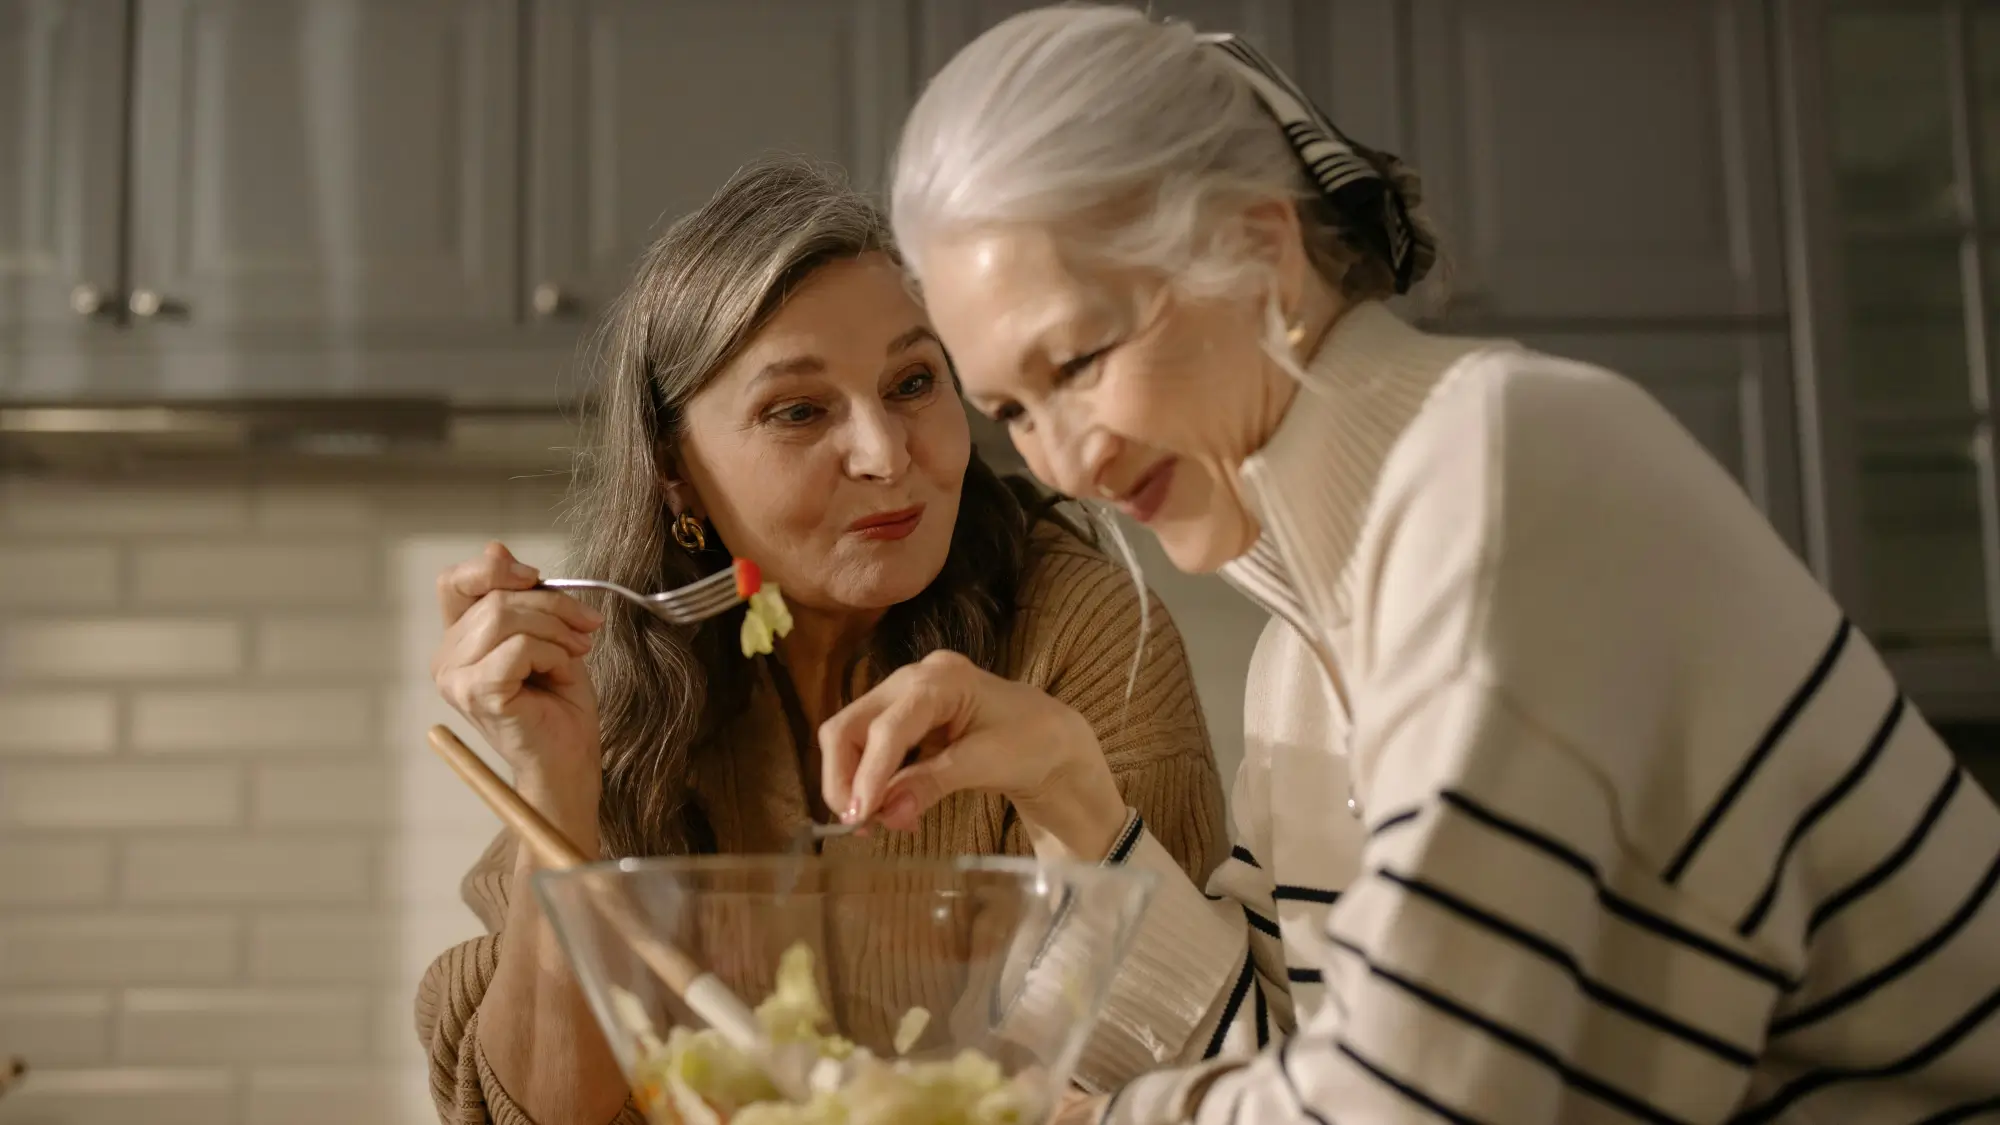 An Elderly Women Eating Salad in the Kitchen